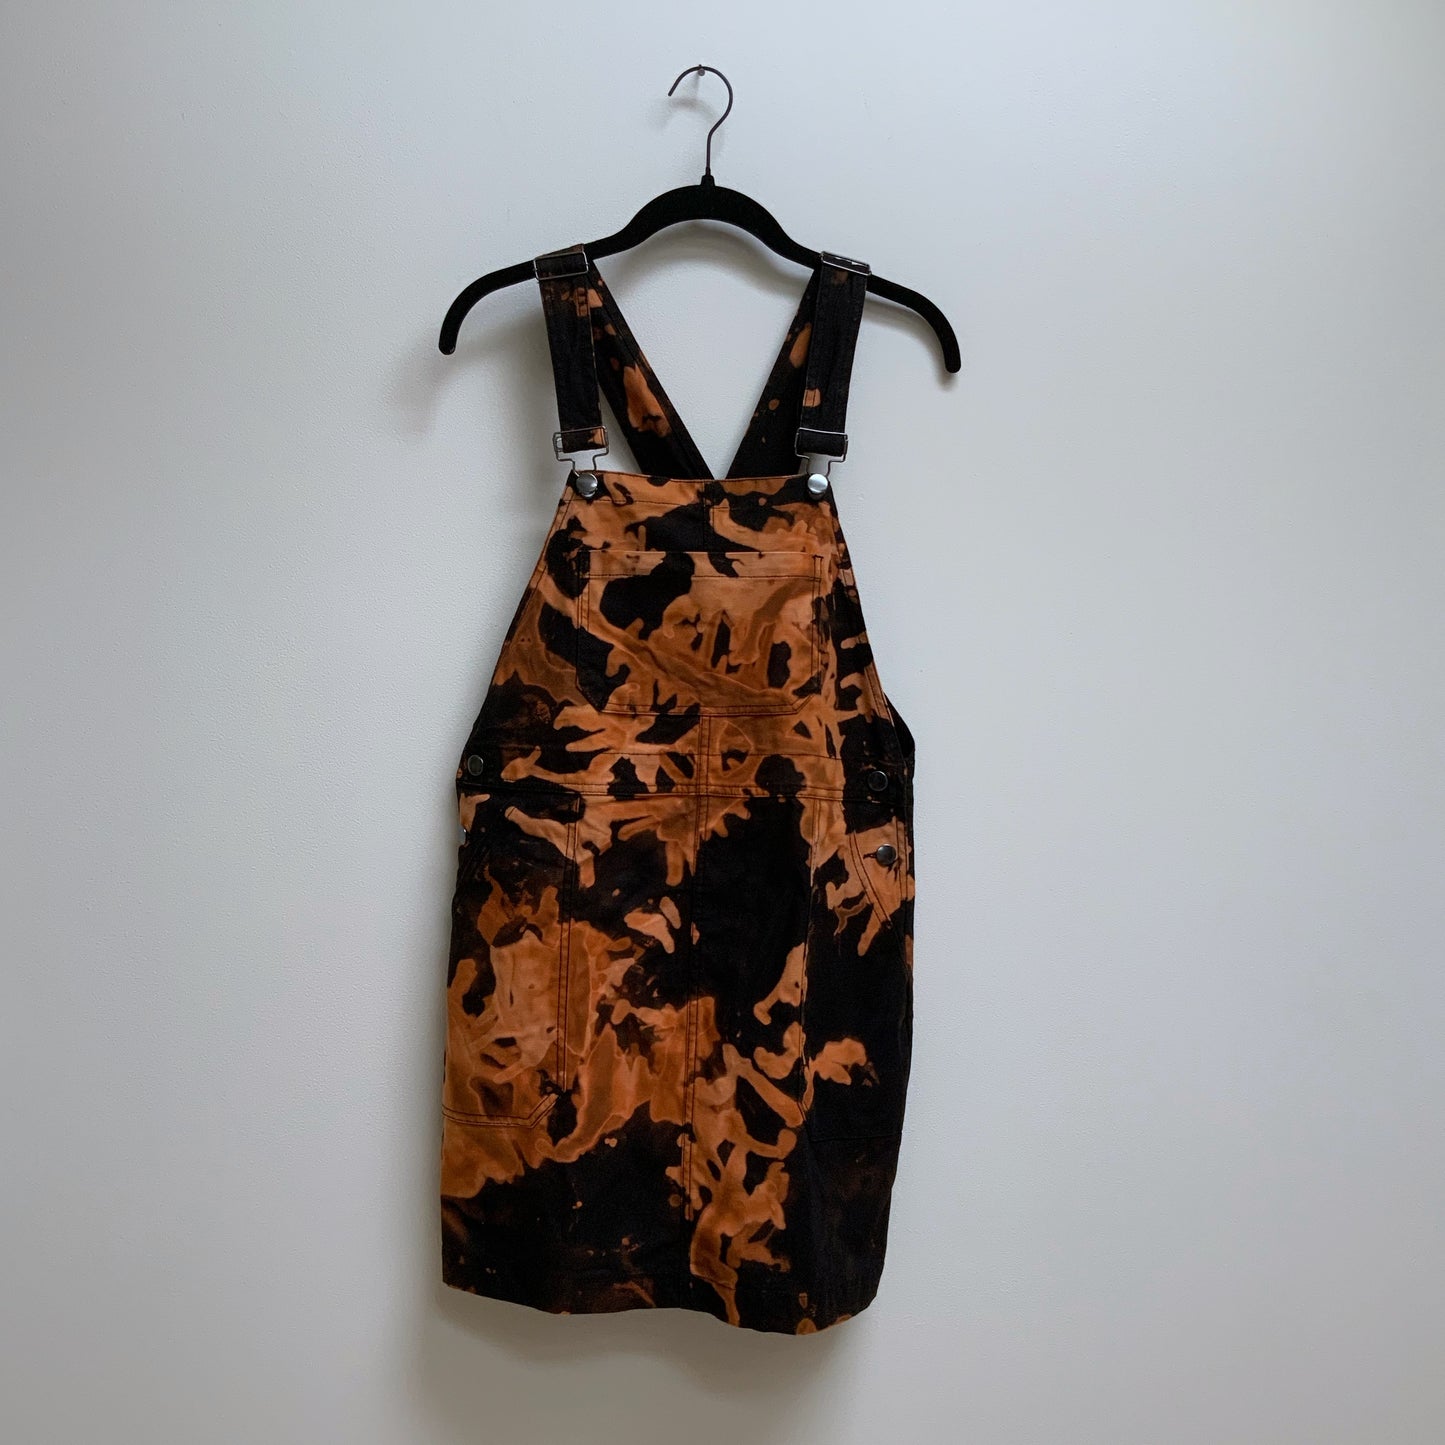 Flame Overall dress